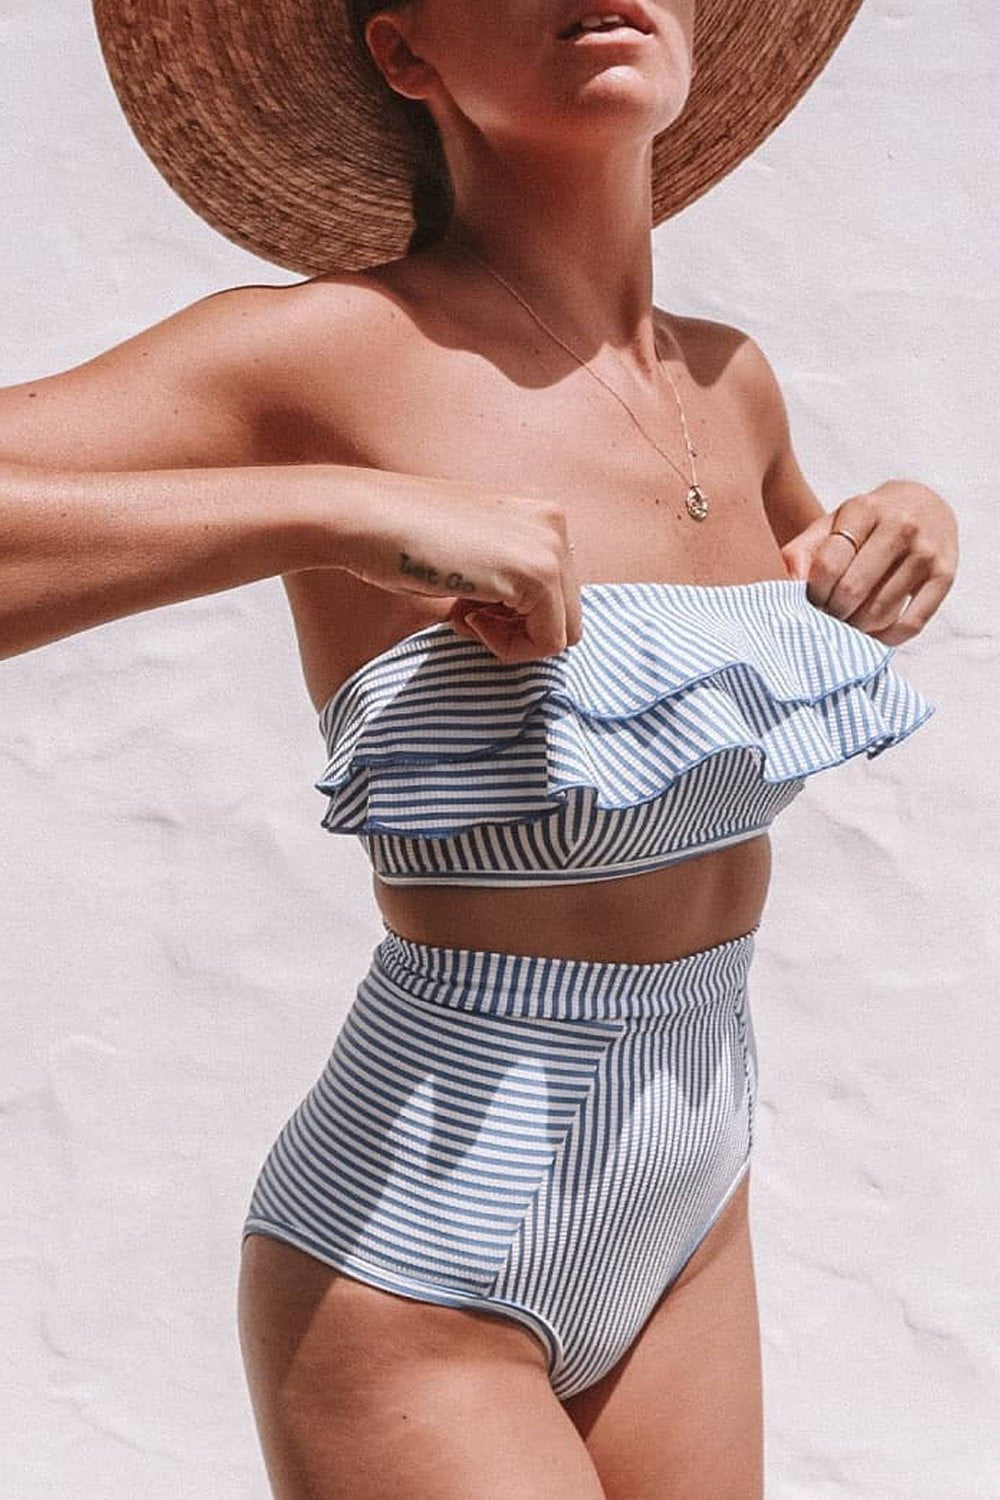 Blue White Striped Frill Bandeau Bikini Top (2207889653819)